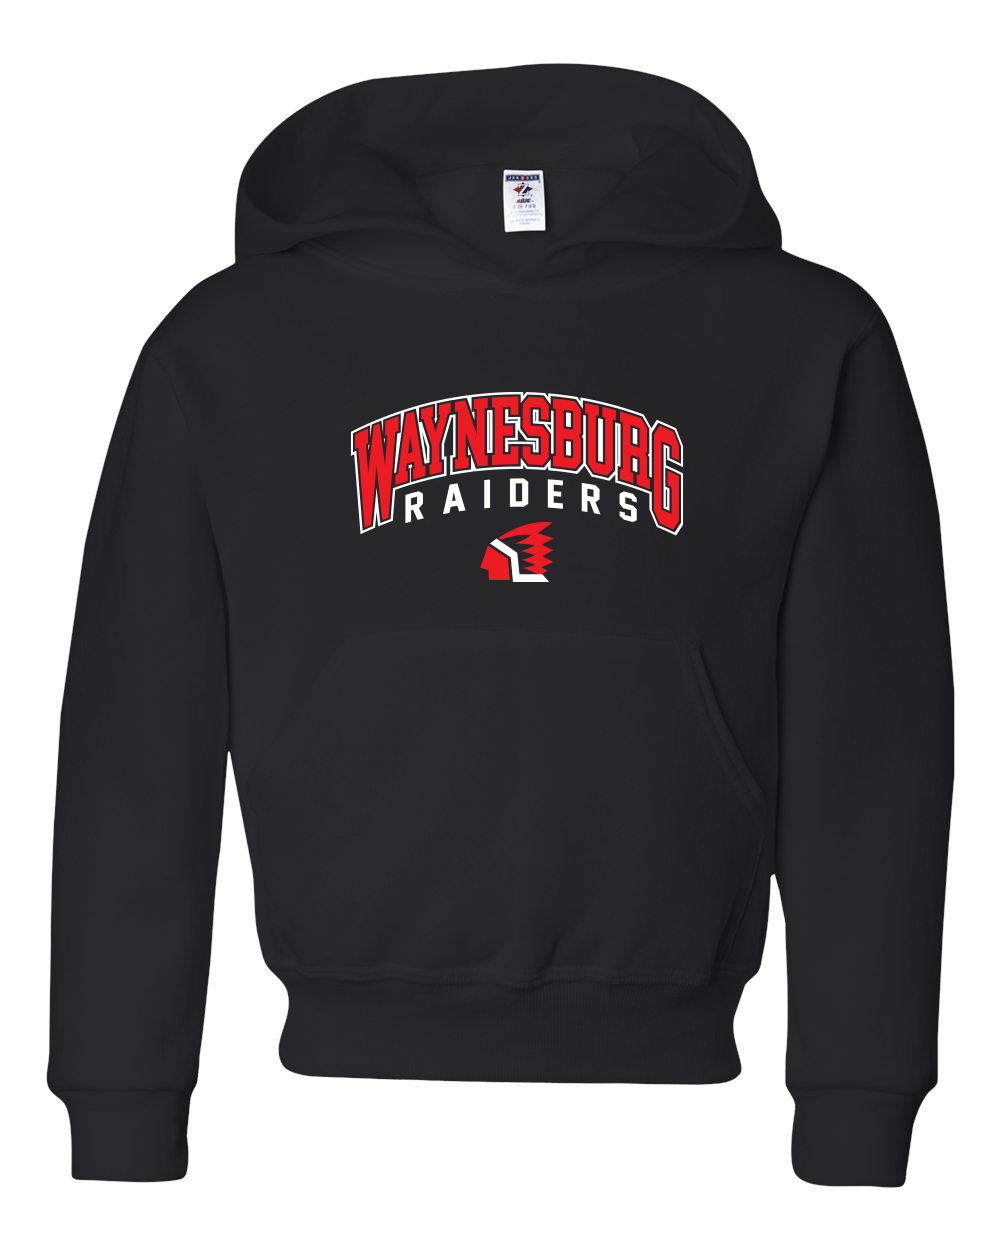 Waynesburg Raiders Arched - NuBlend Youth Hooded Sweatshirt